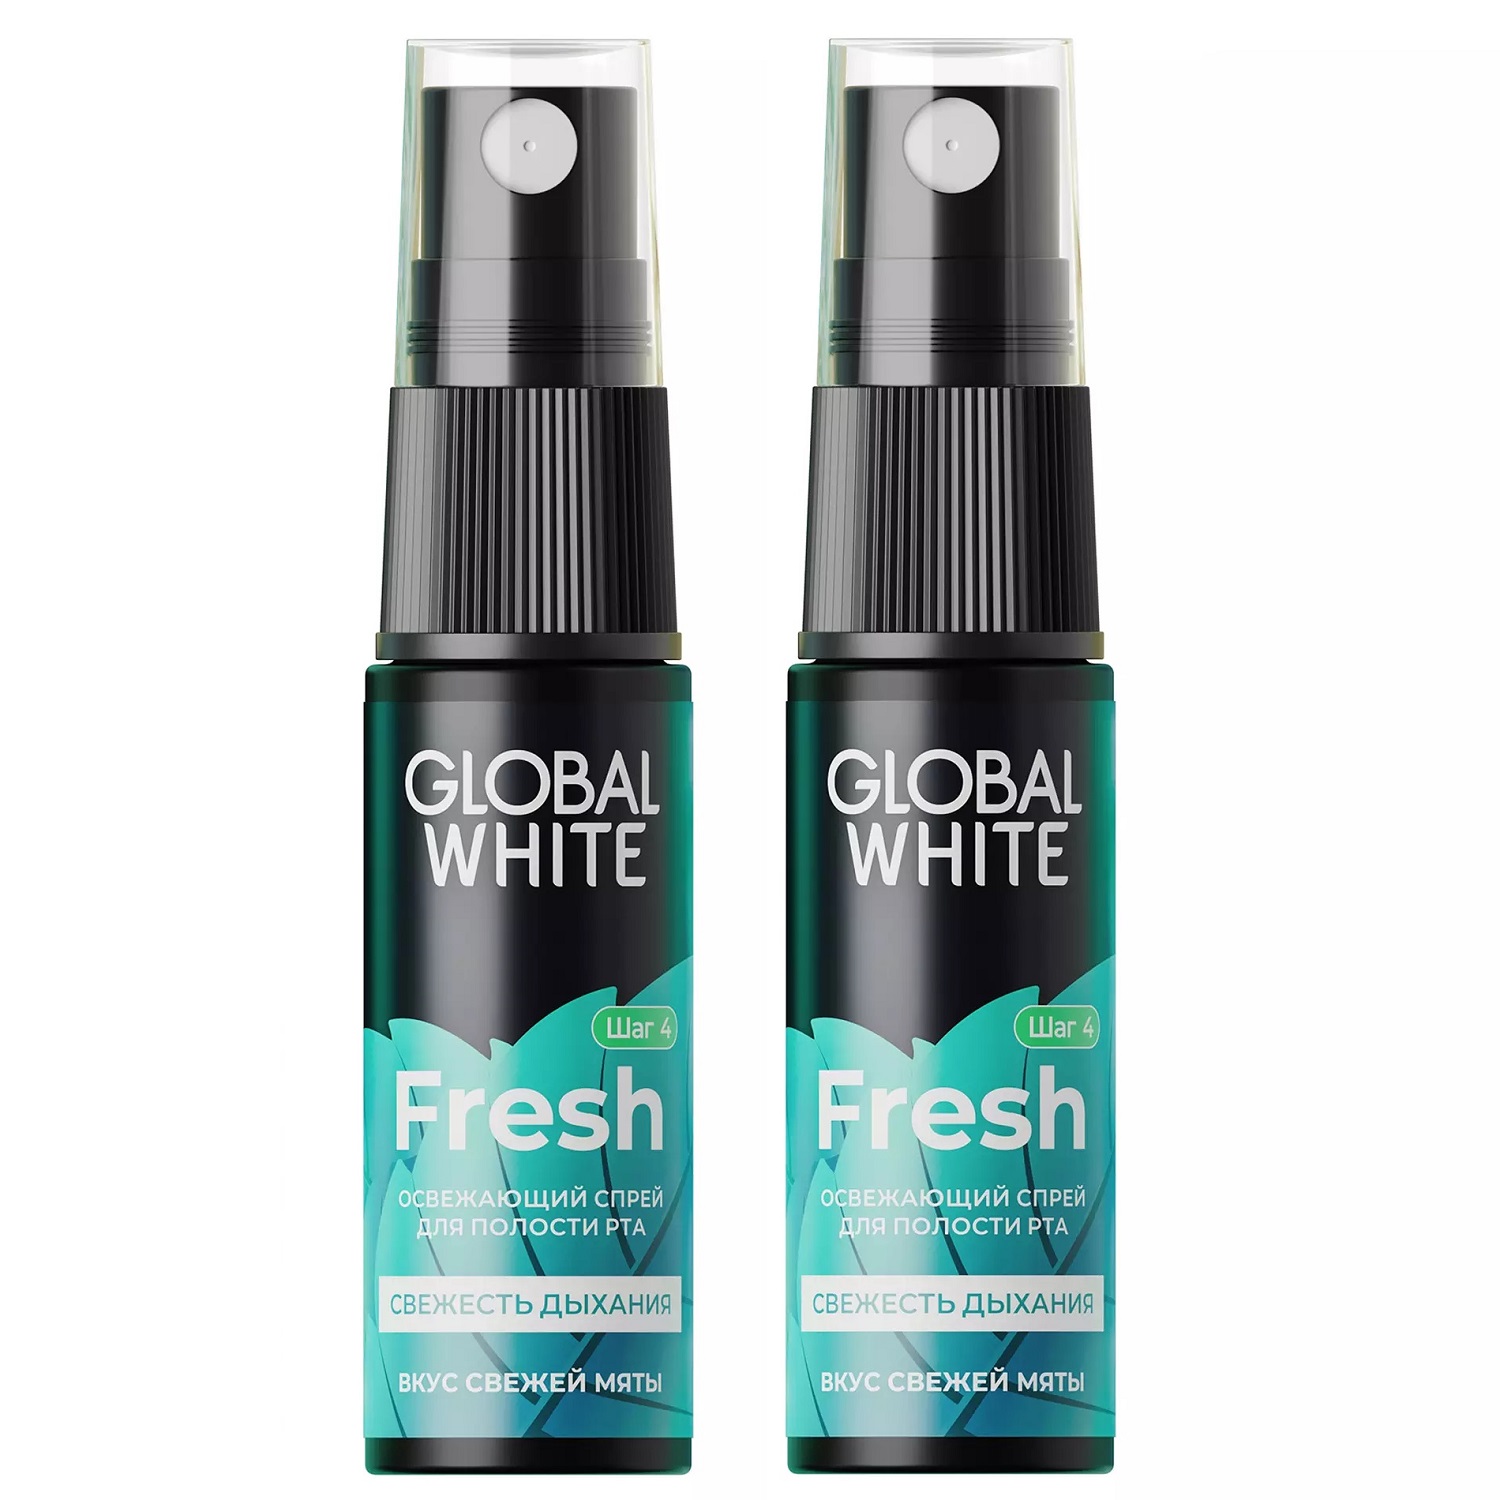 Global White Набор: освежающий спрей для полости рта «Свежее дыхание», 2 х 15 мл (Global White, Поддержание эффекта отбеливания)